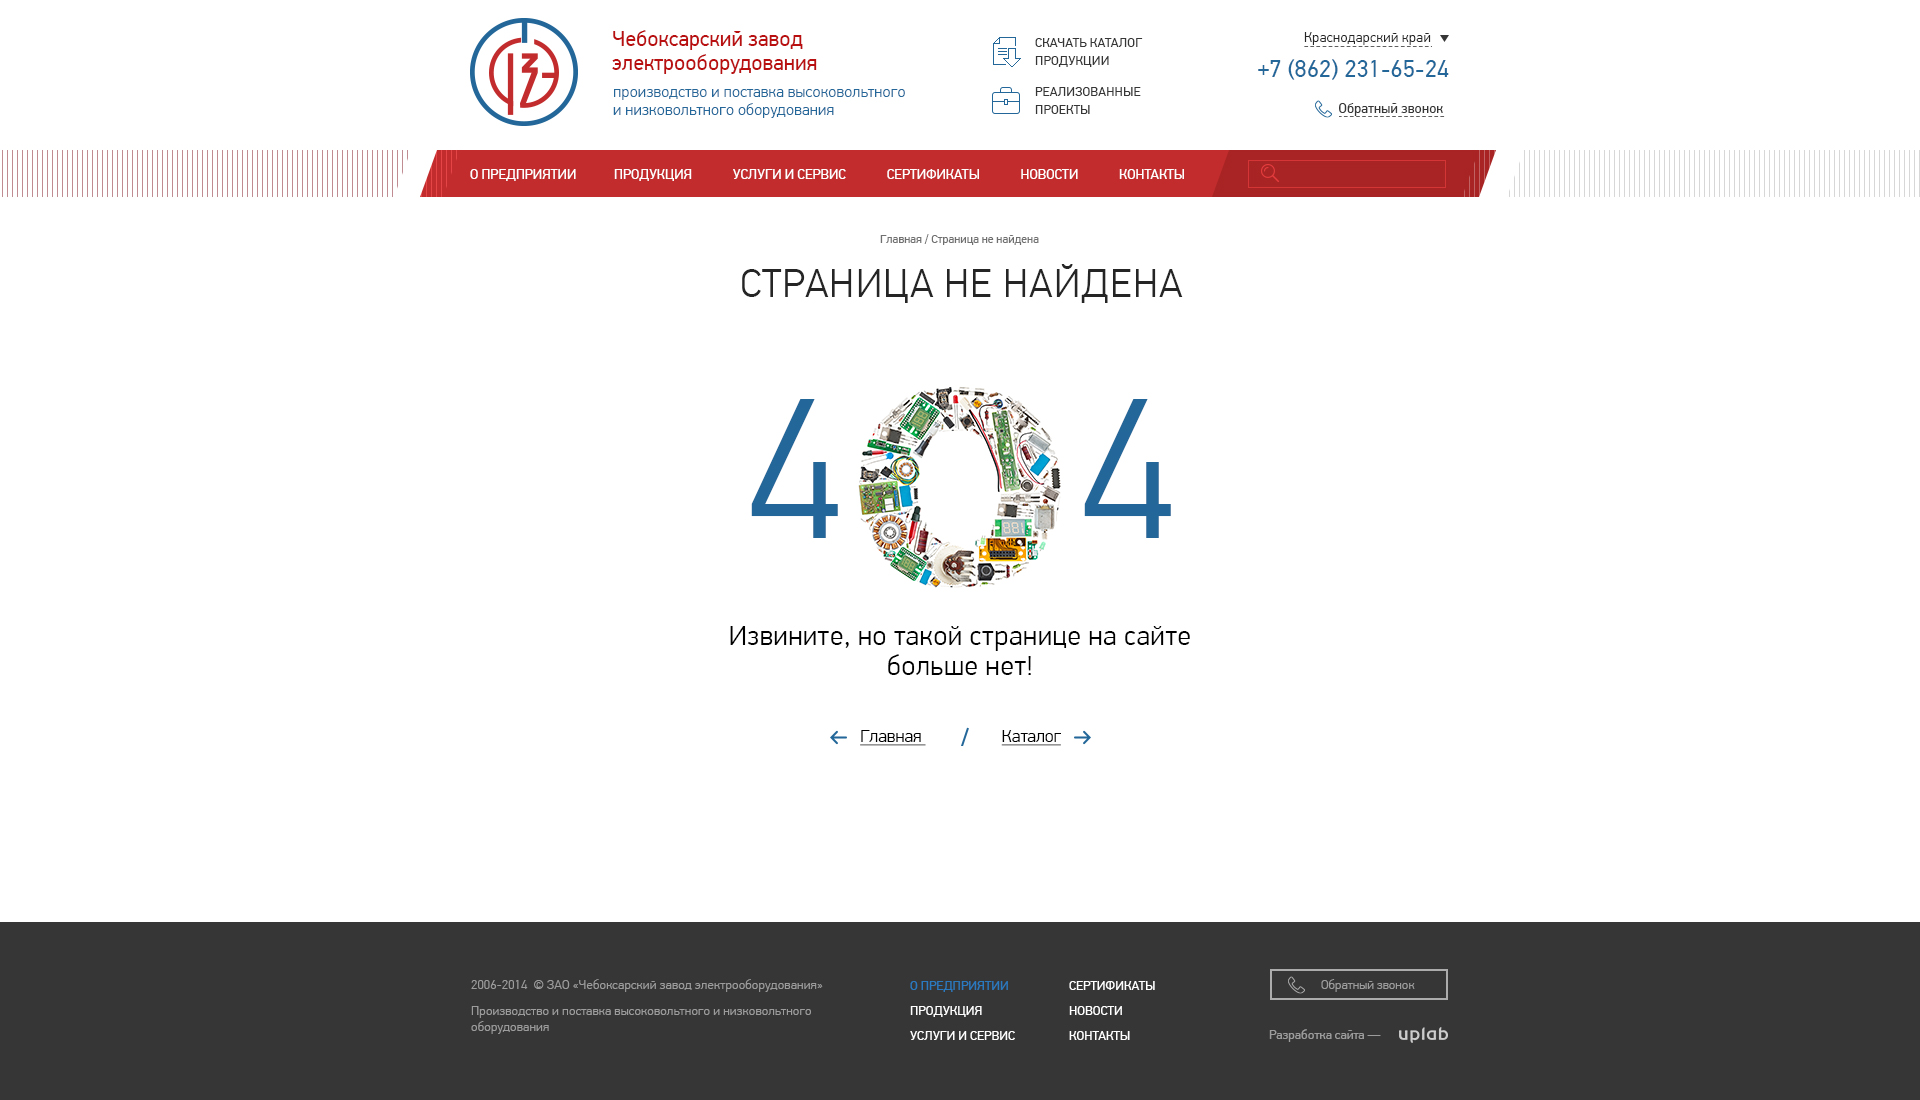 корпоративный сайт "чебоксарского завода электрооборудования" 